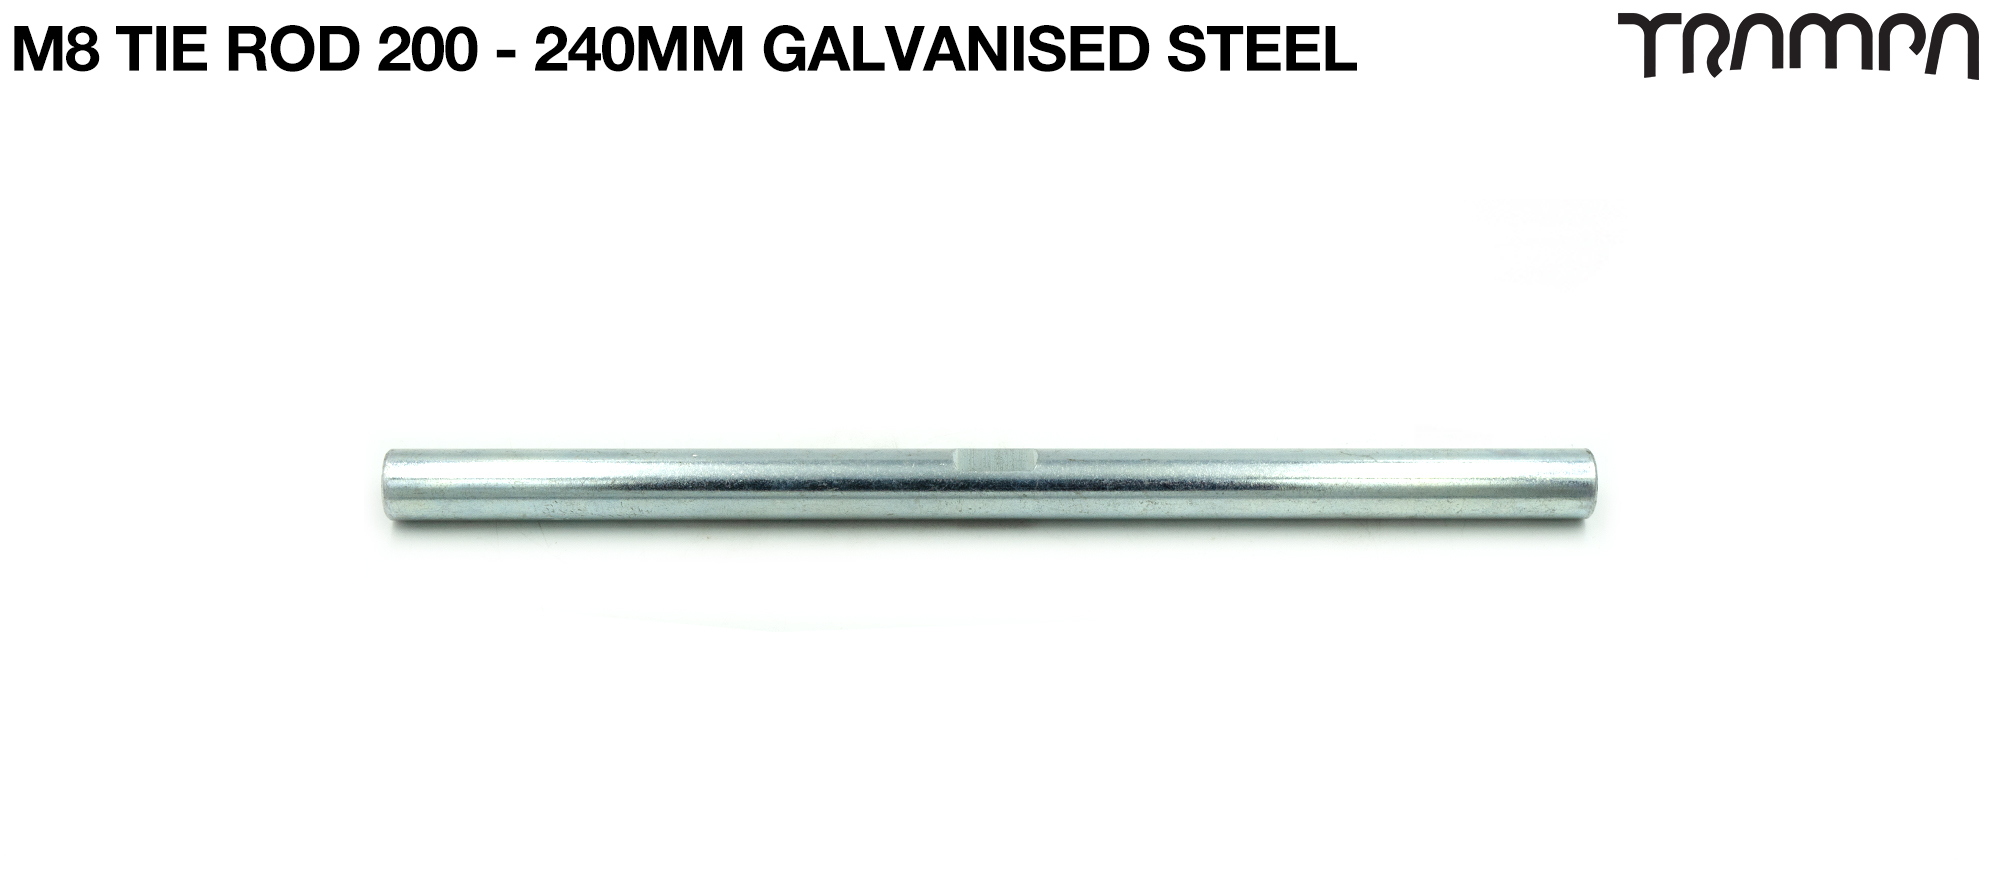 M8 Tie Rod 200 -240mm Galvanised Steel